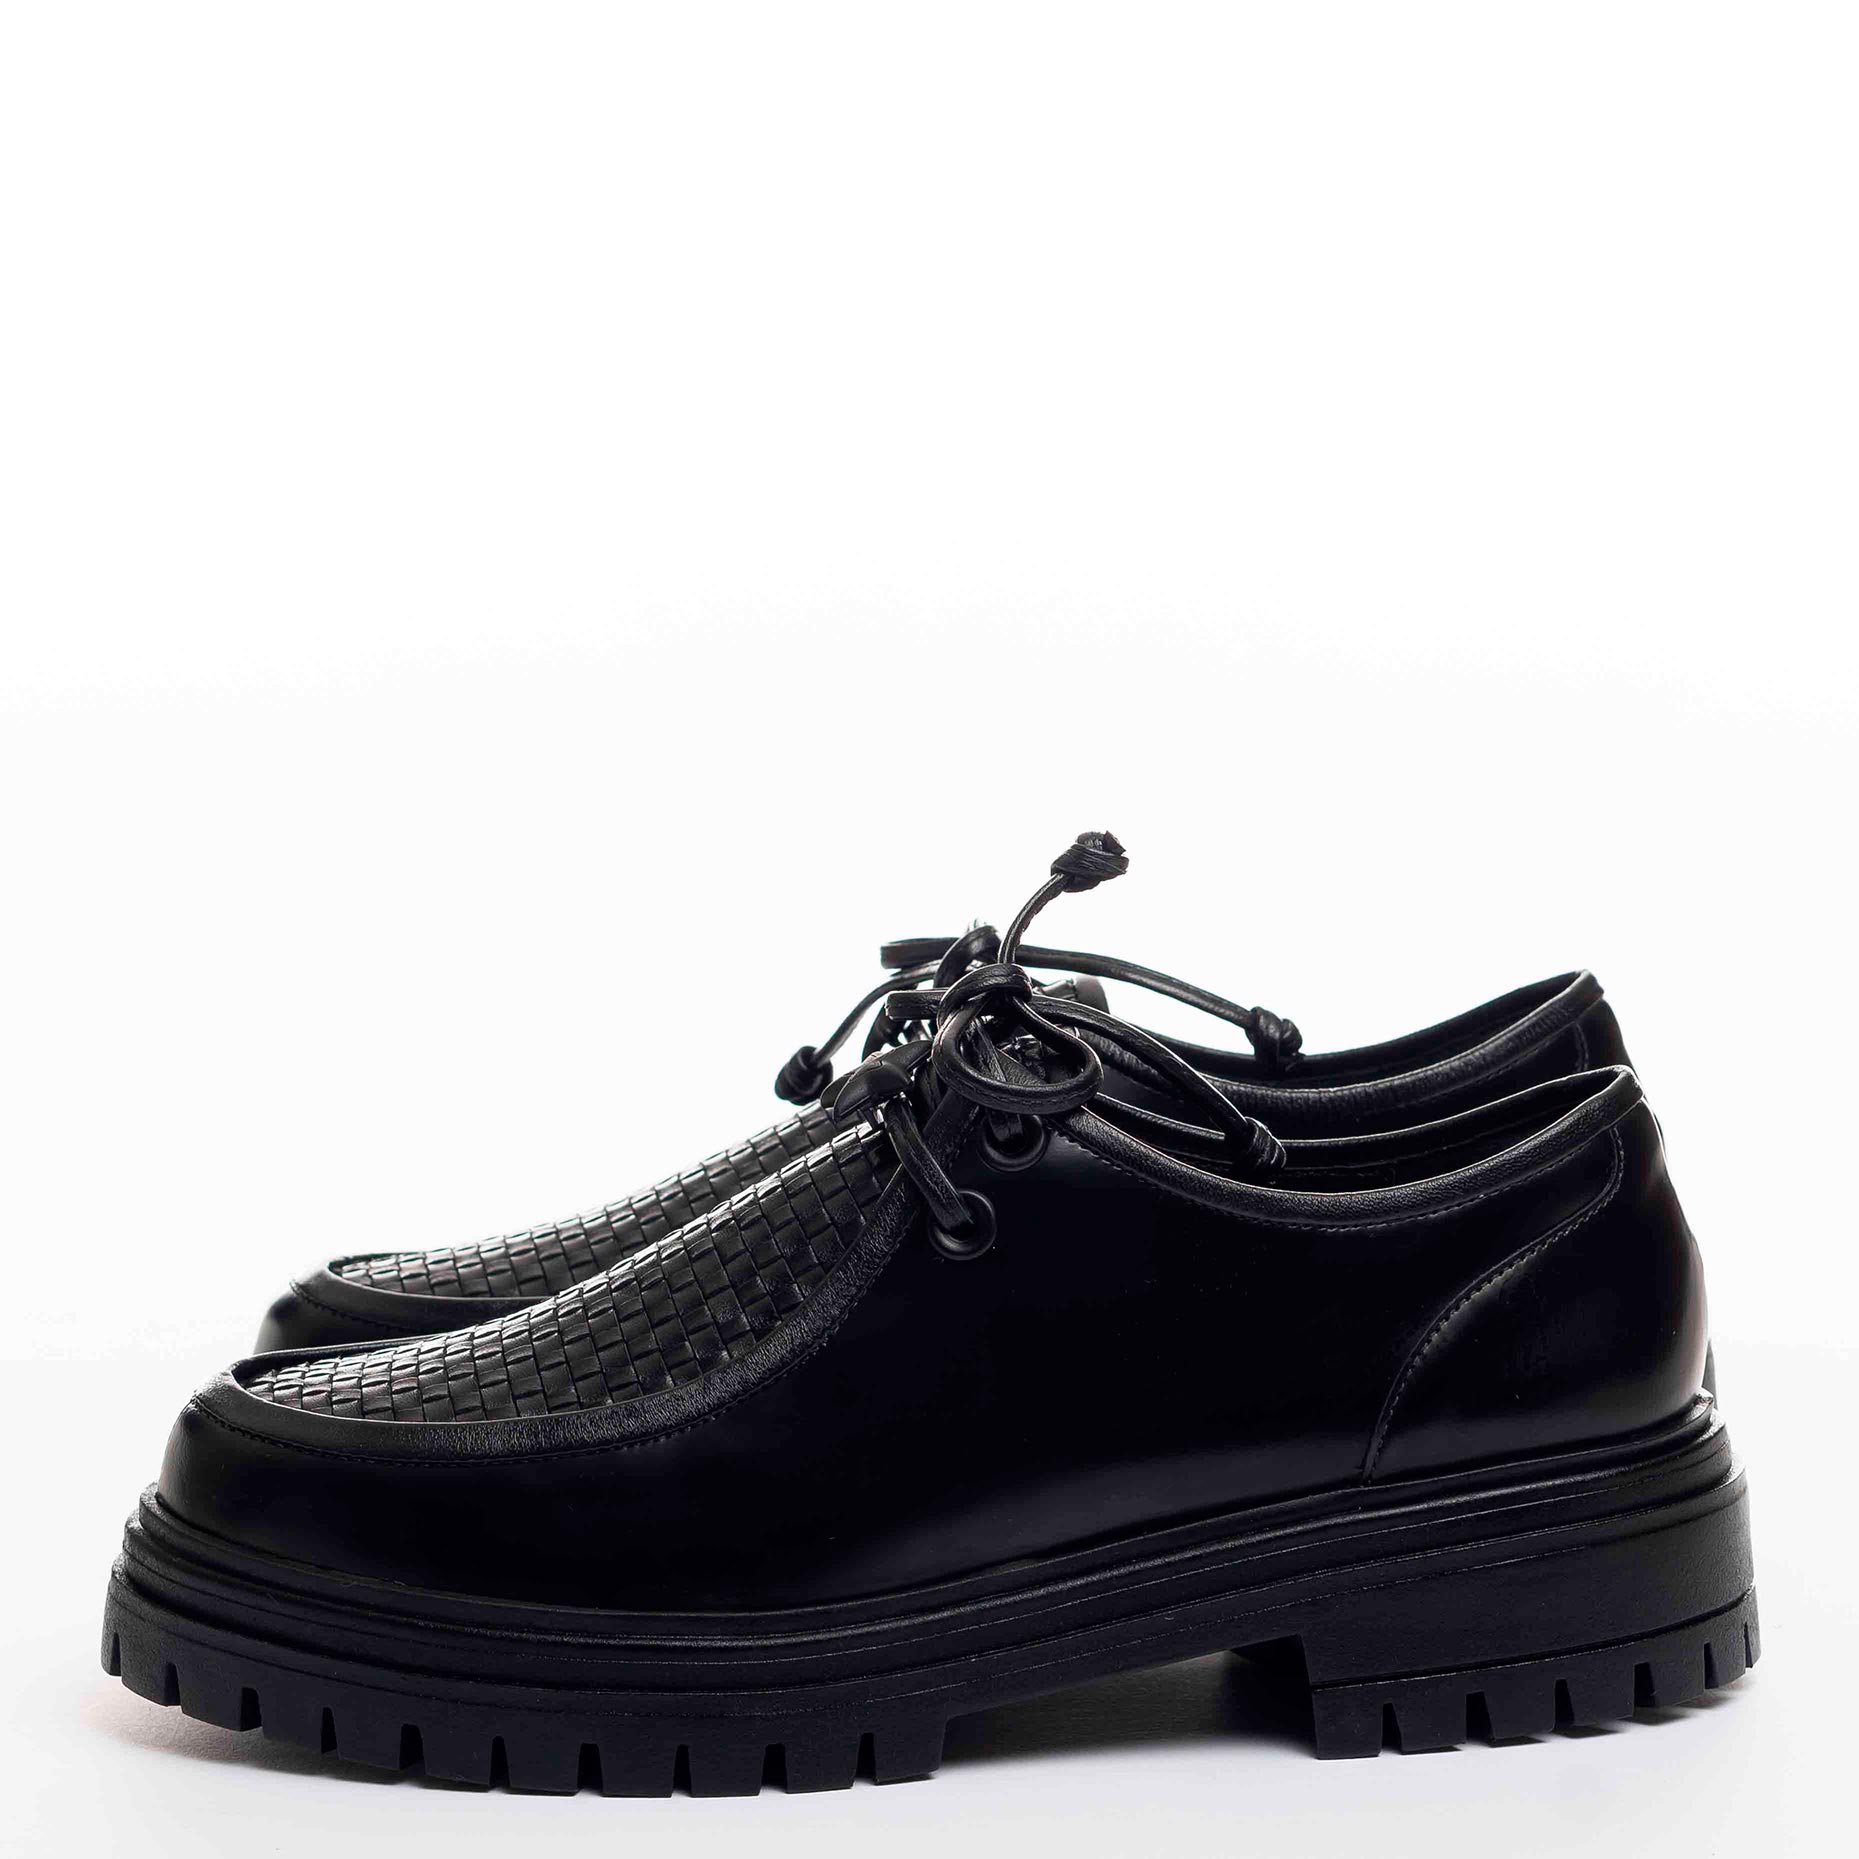 Reggy Shoe Woven Black